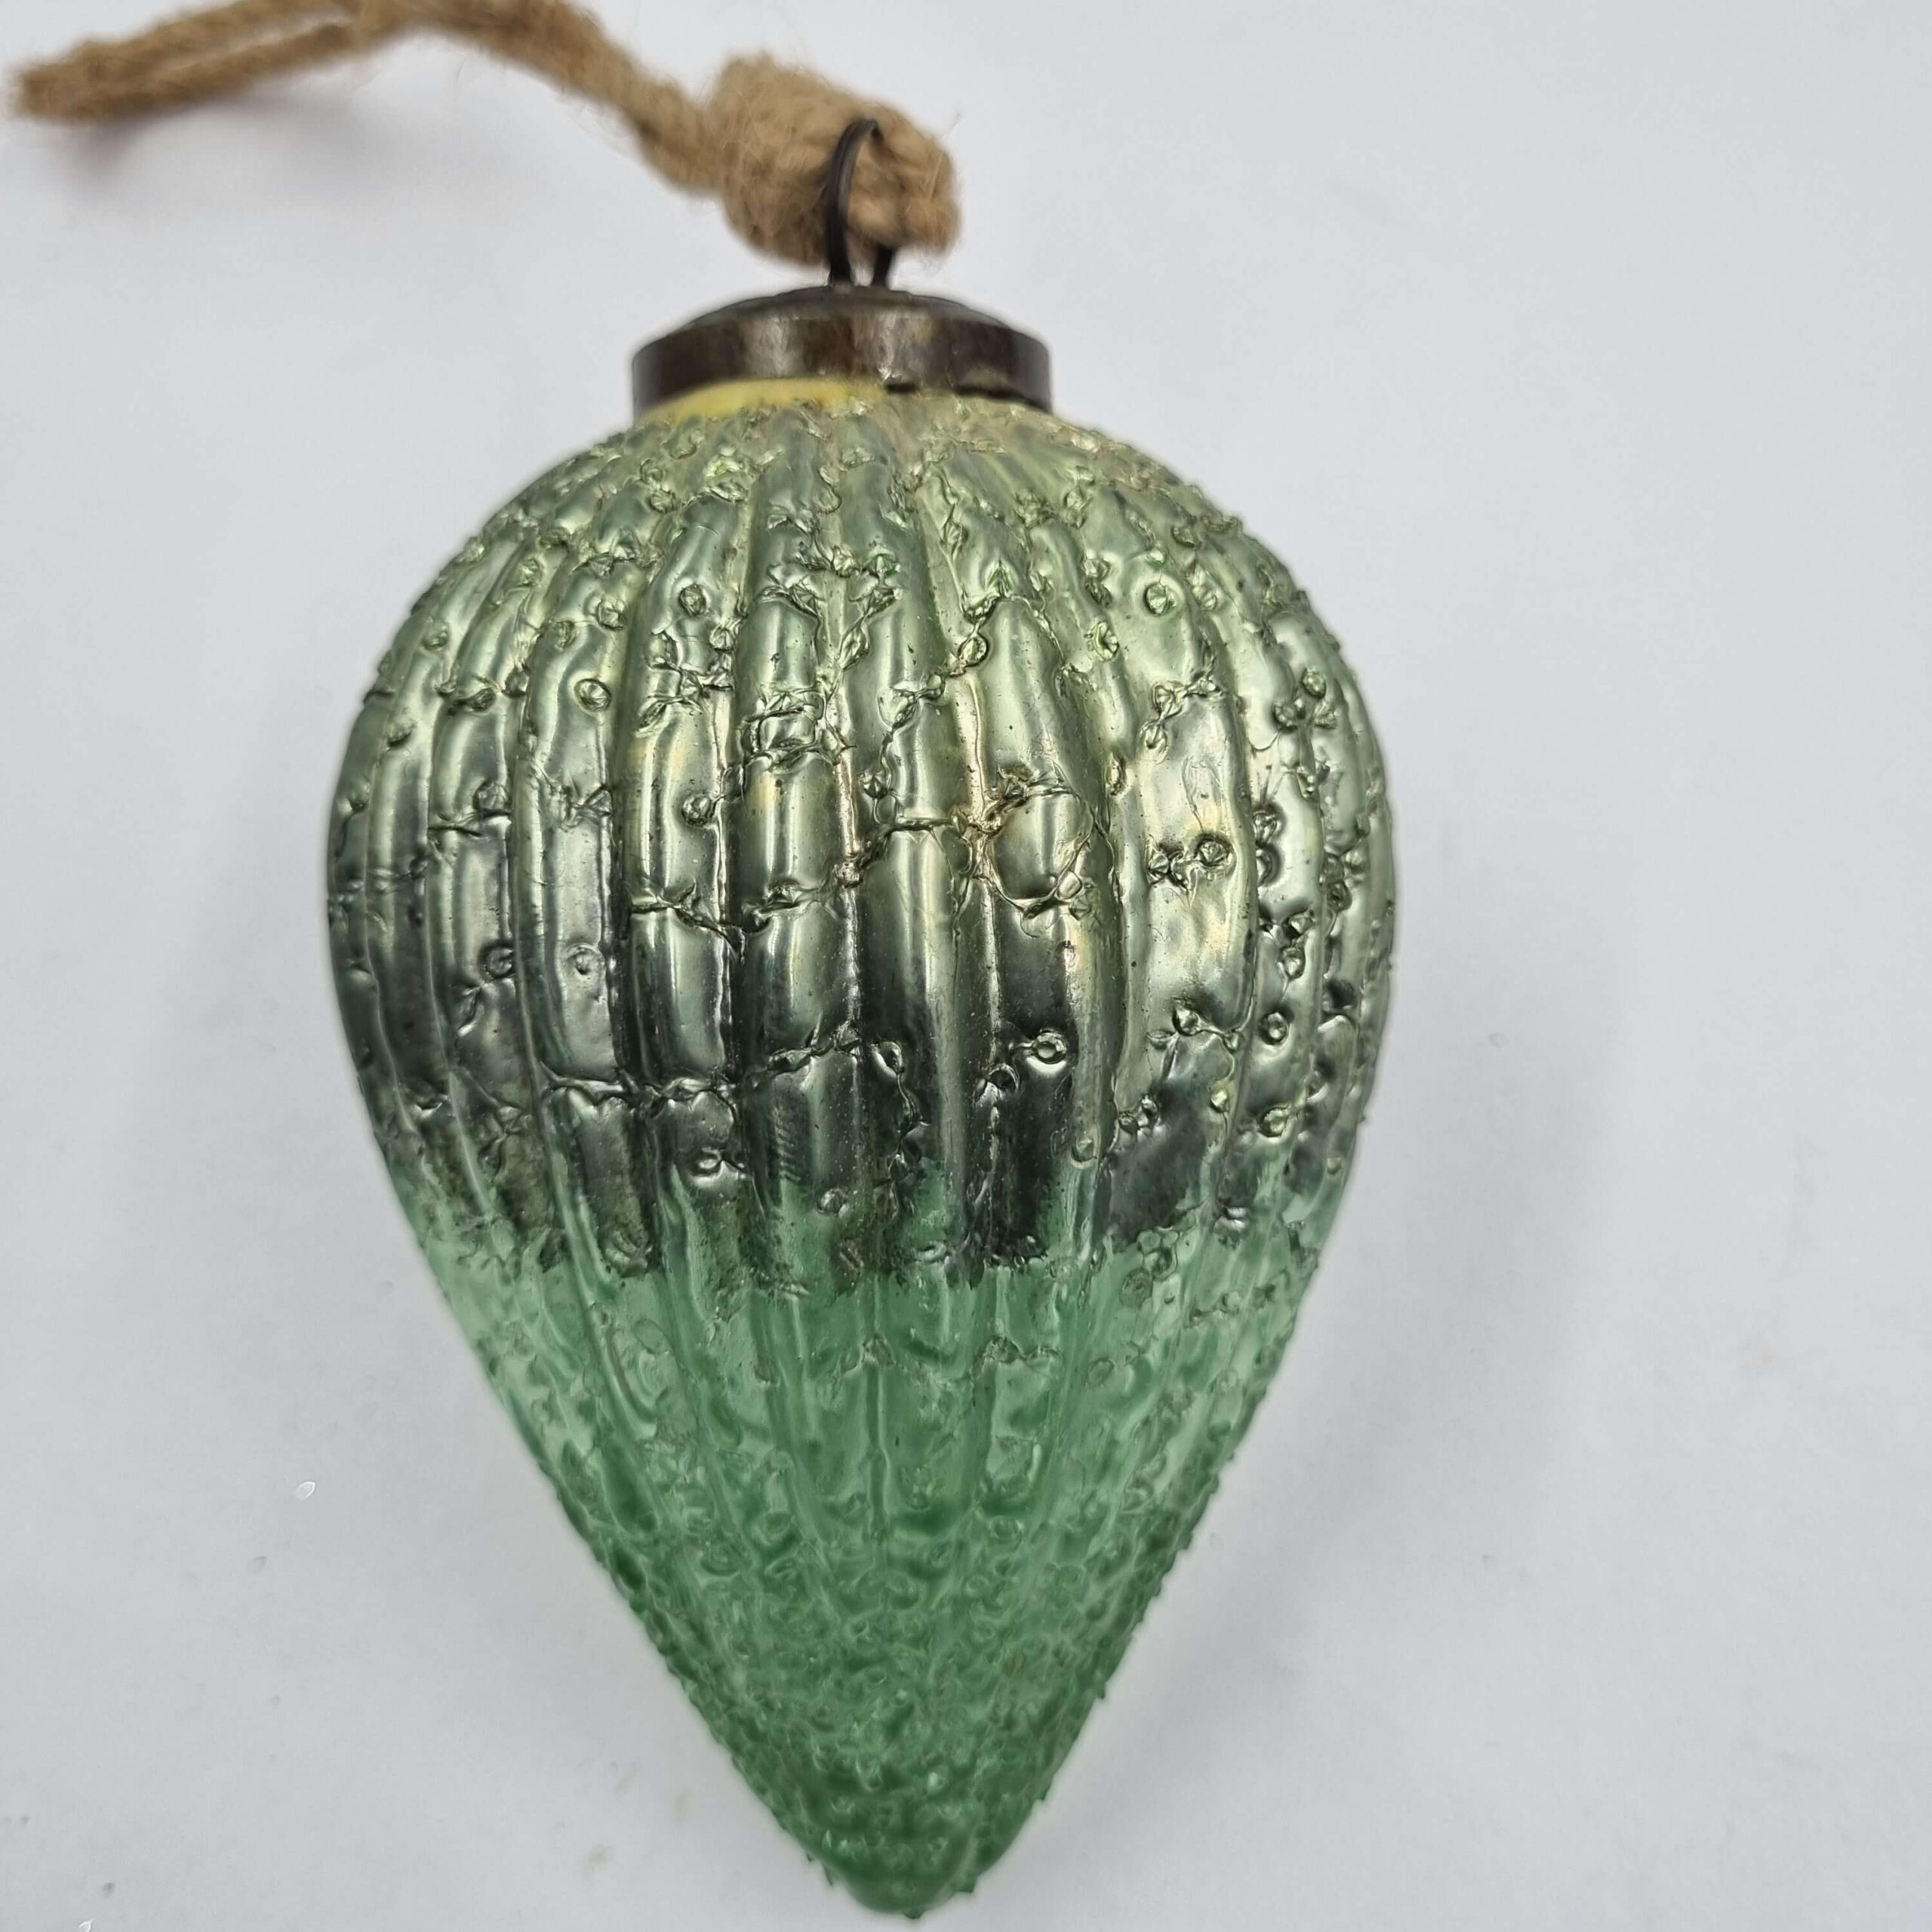 Tressa Glass Ornament, Green